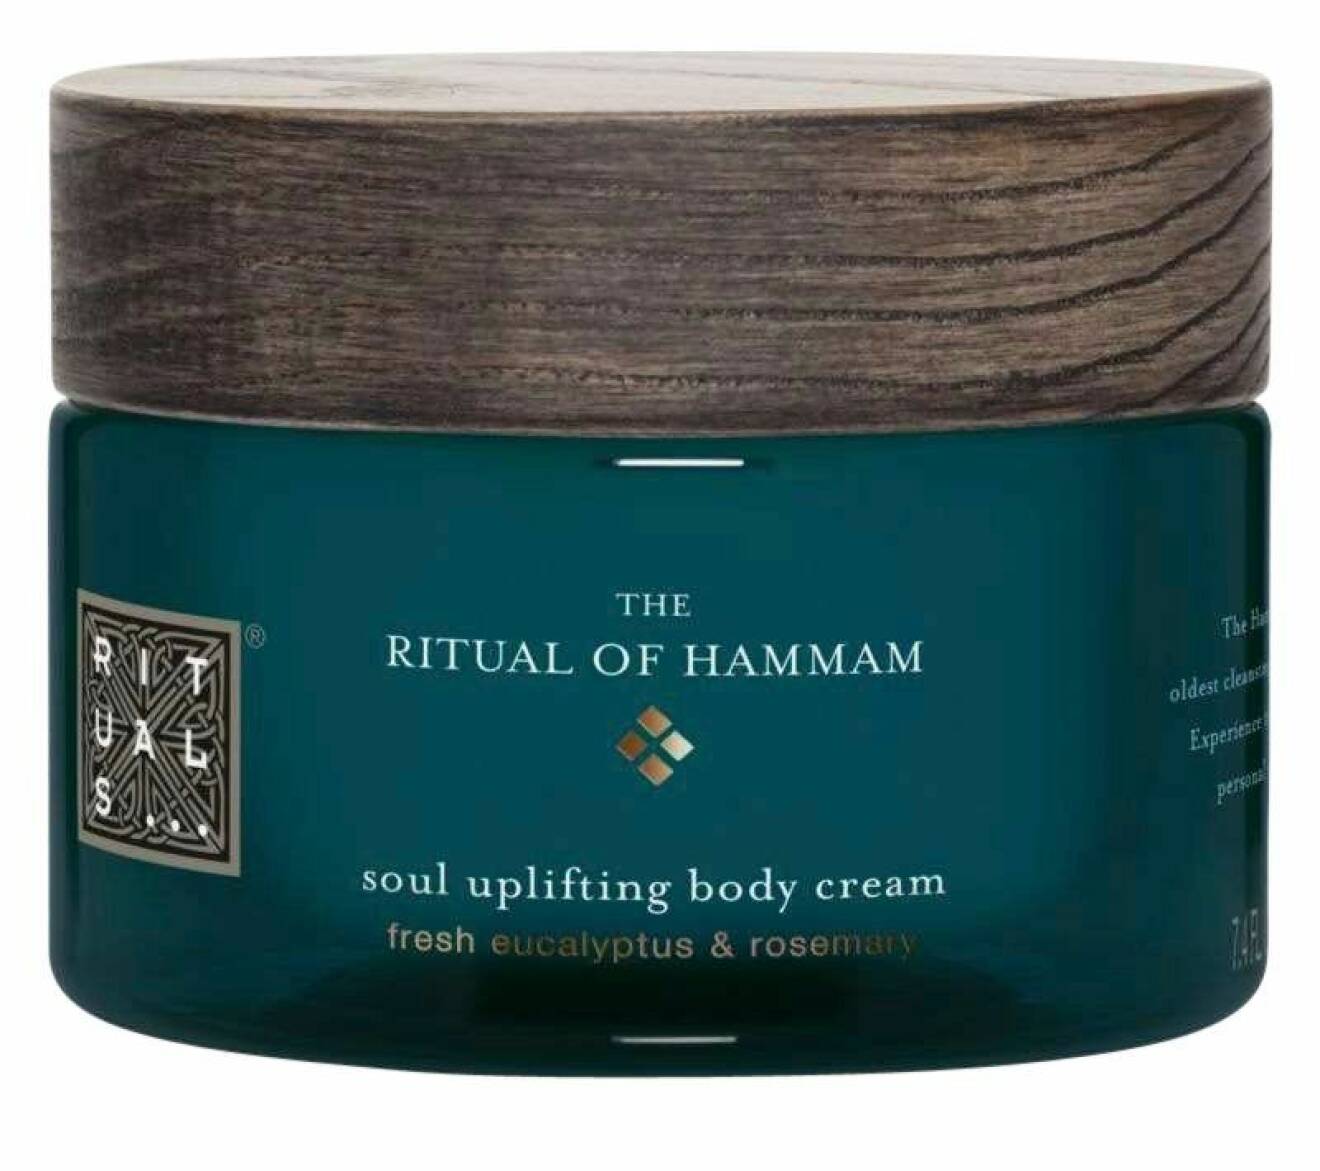 Soul uplifting body cream från Rituals